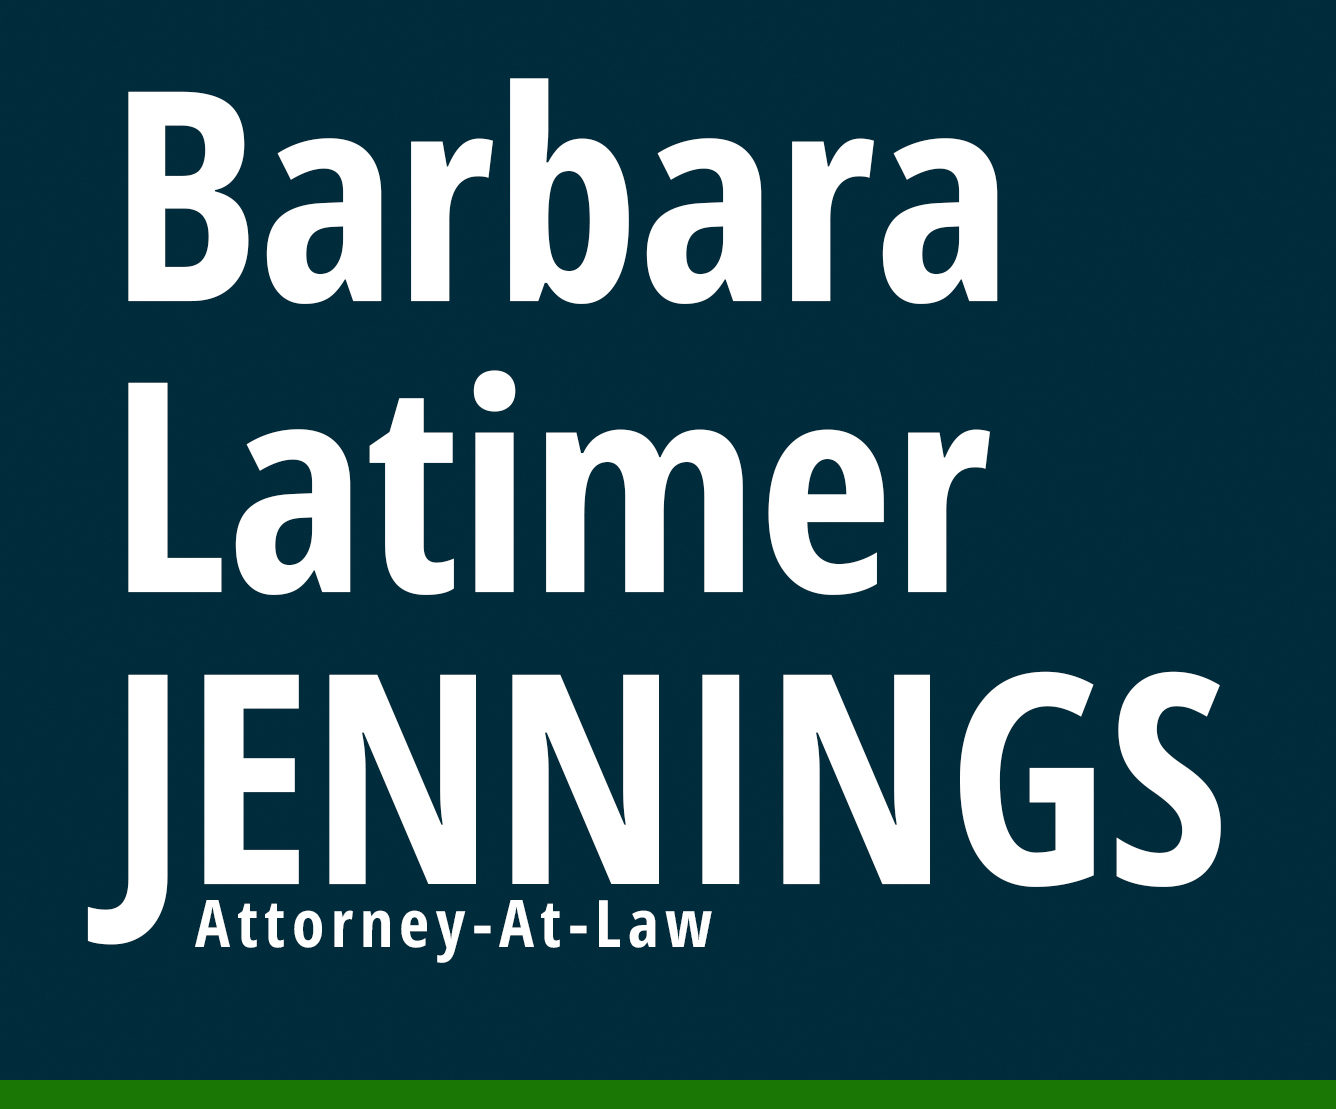 Barbara Latimer Jennings